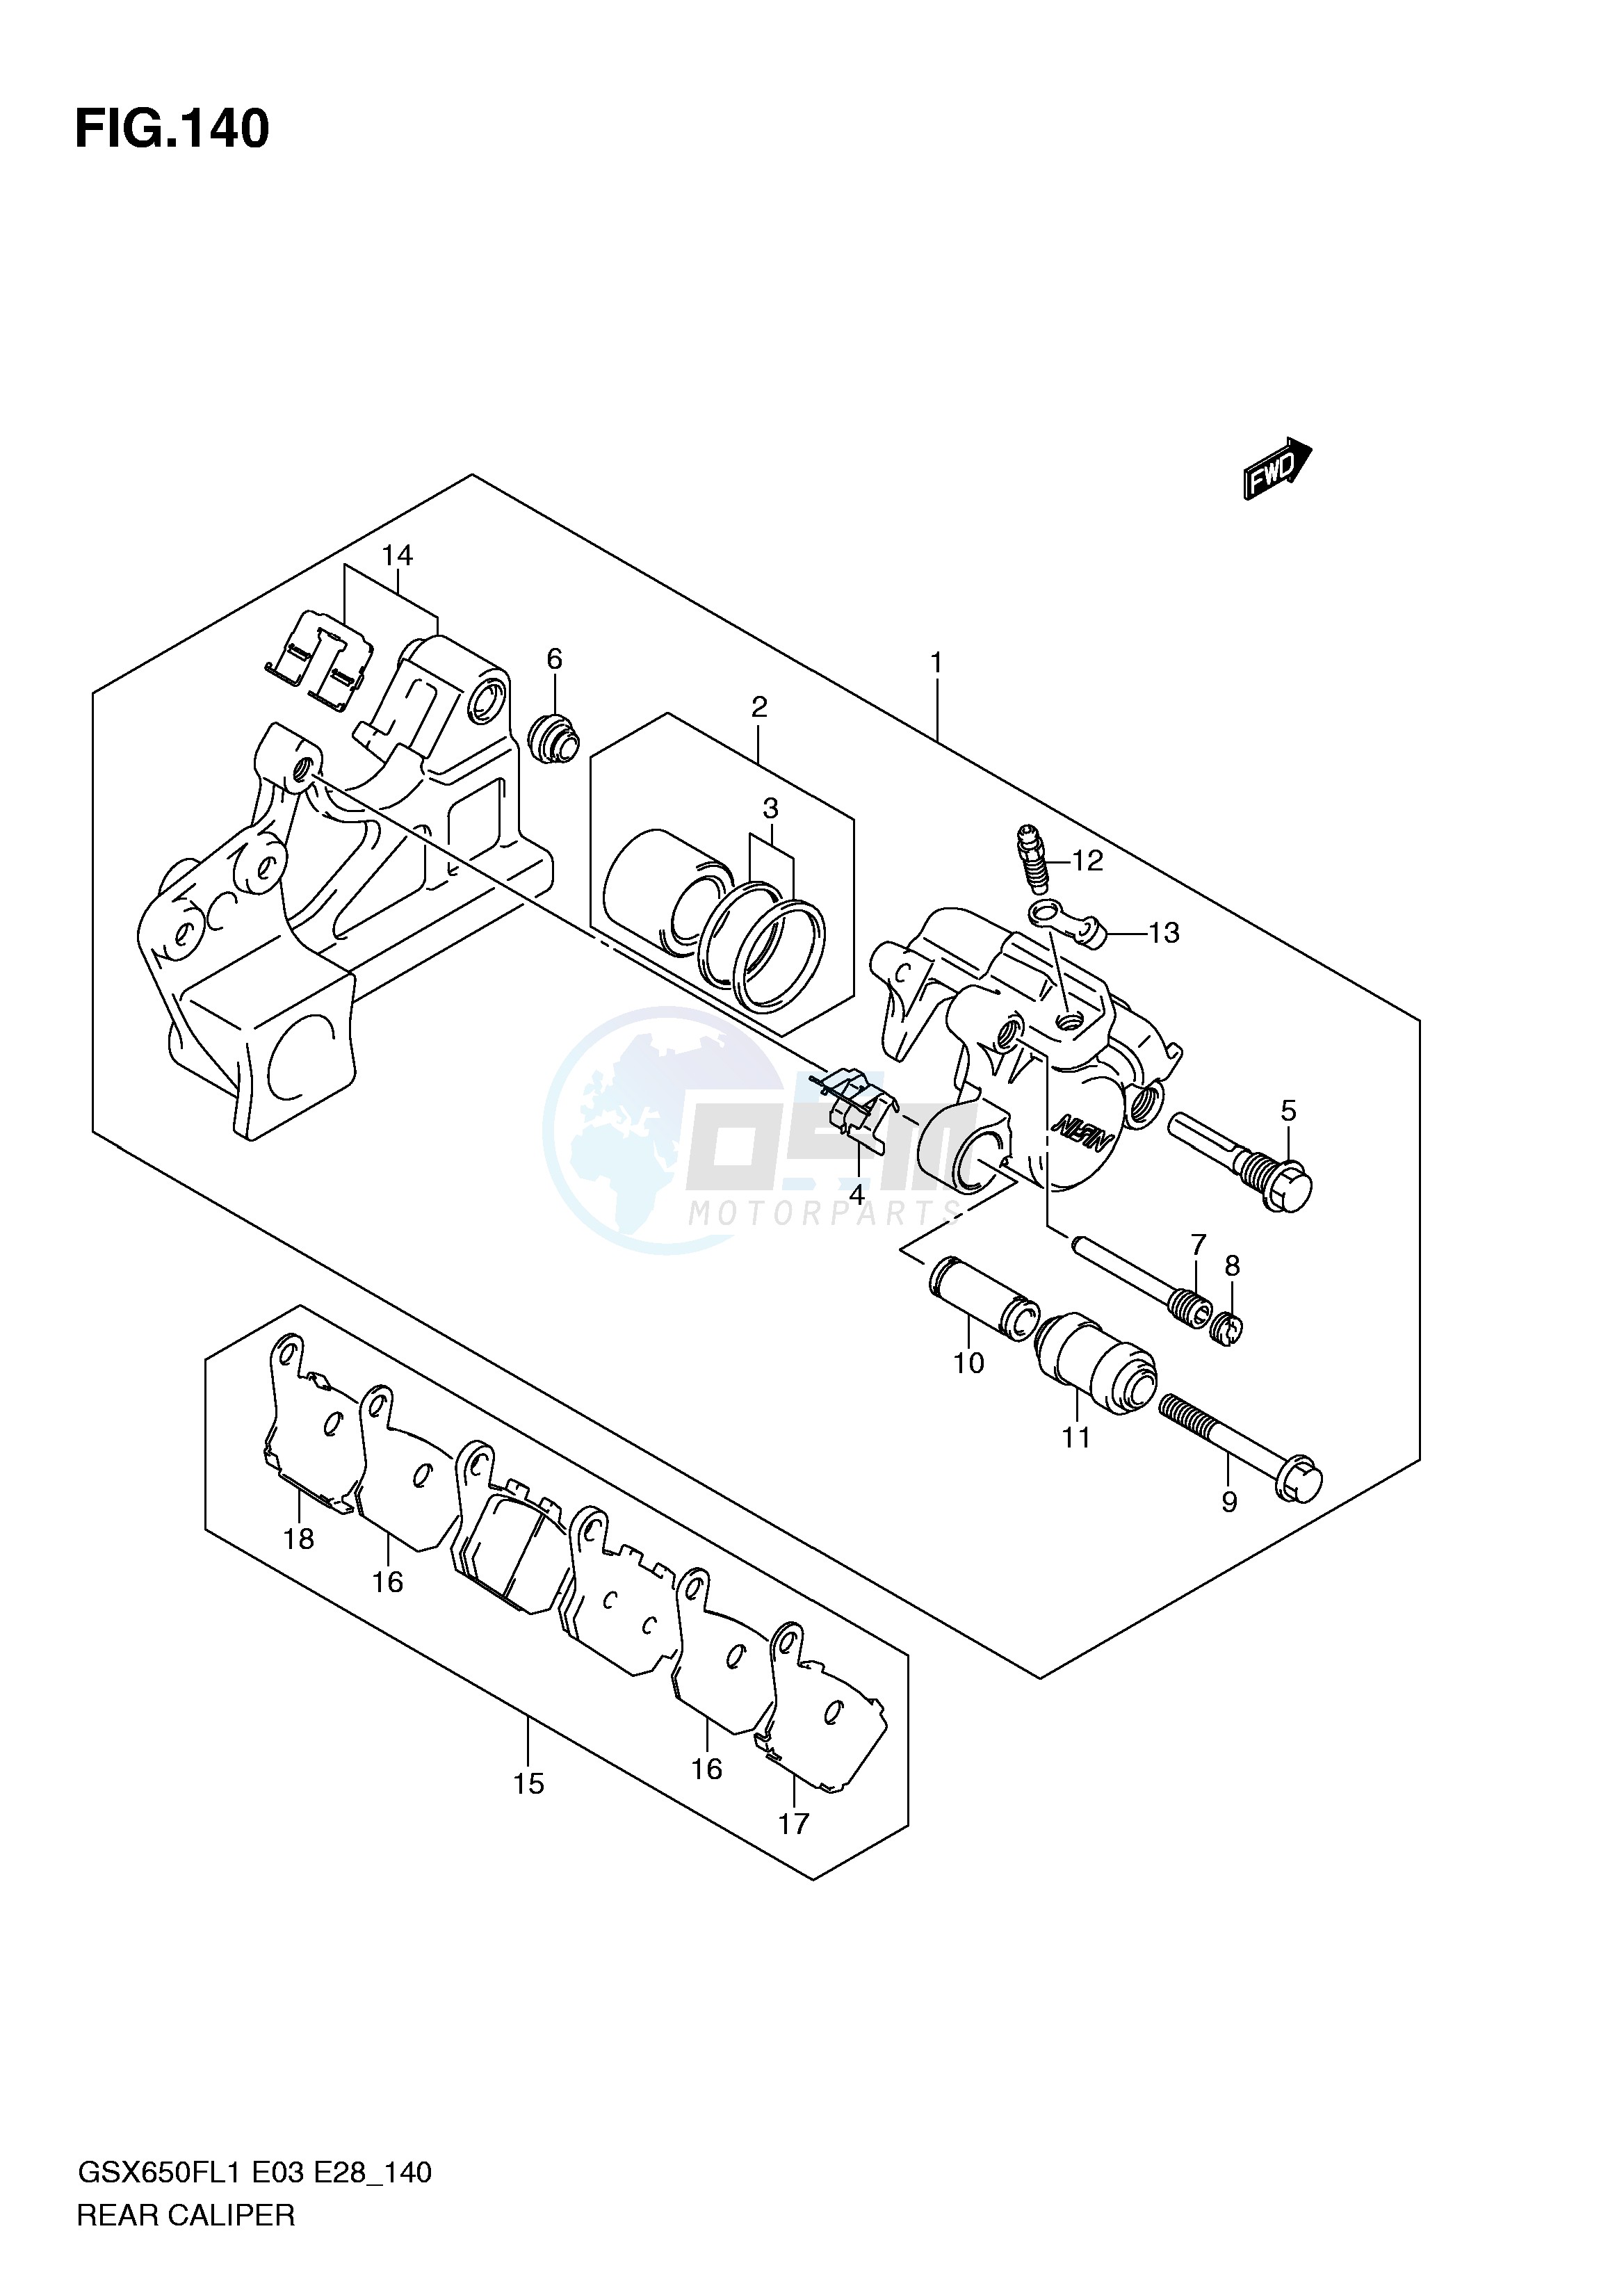 REAR CALIPER (GSX650FL1 E3) blueprint